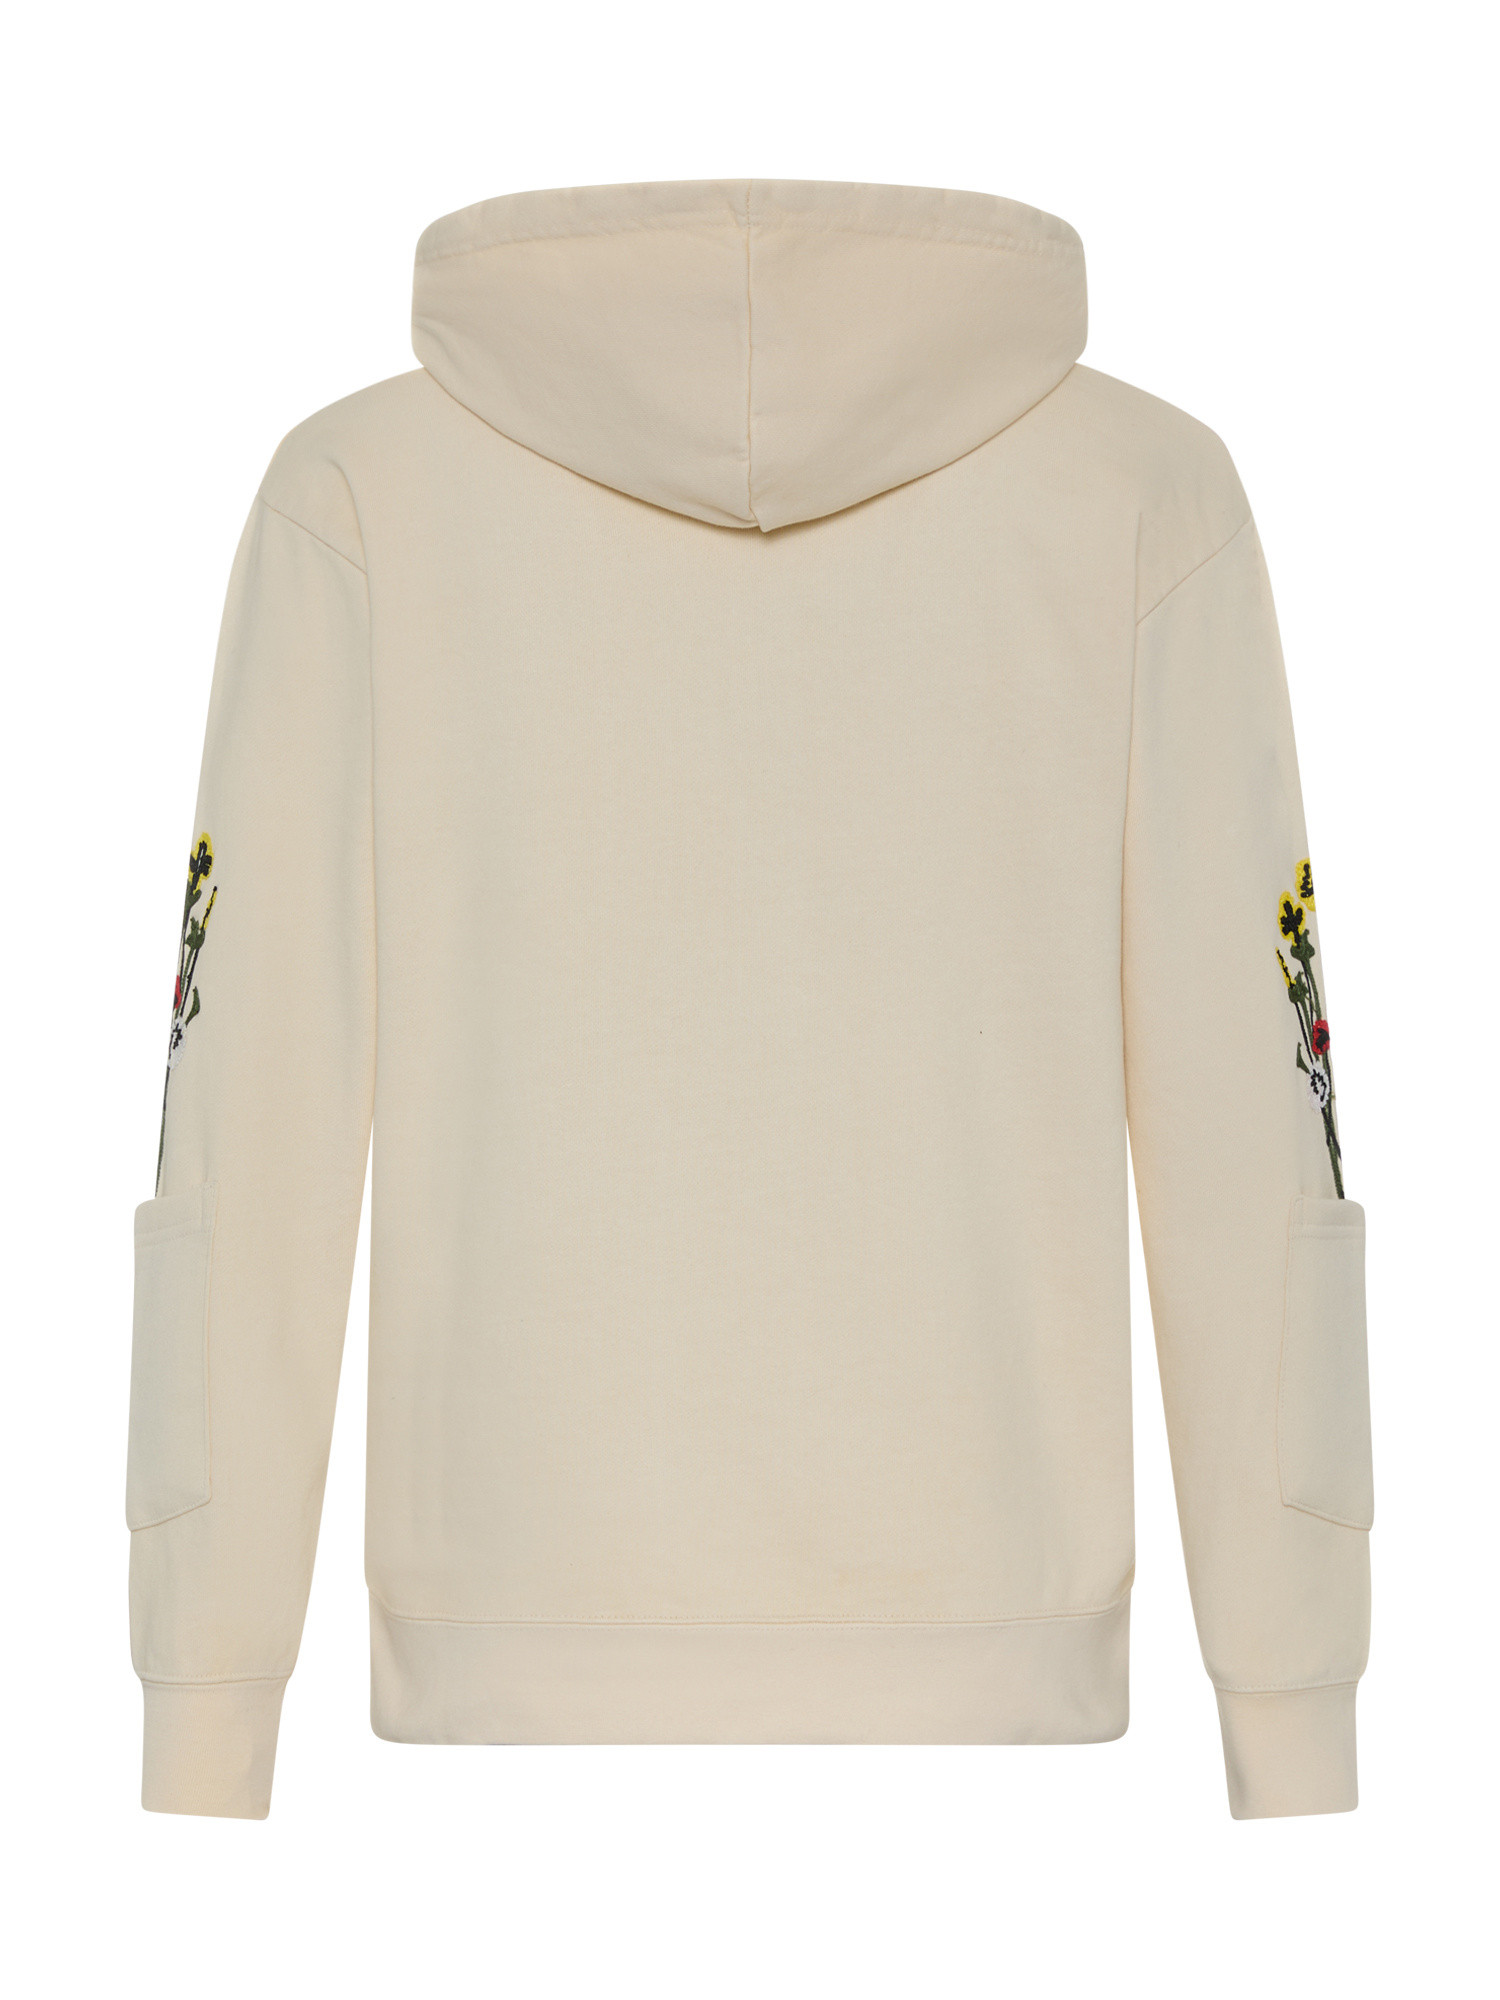 Market - Hooded sweatshirt with print, Beige, large image number 1